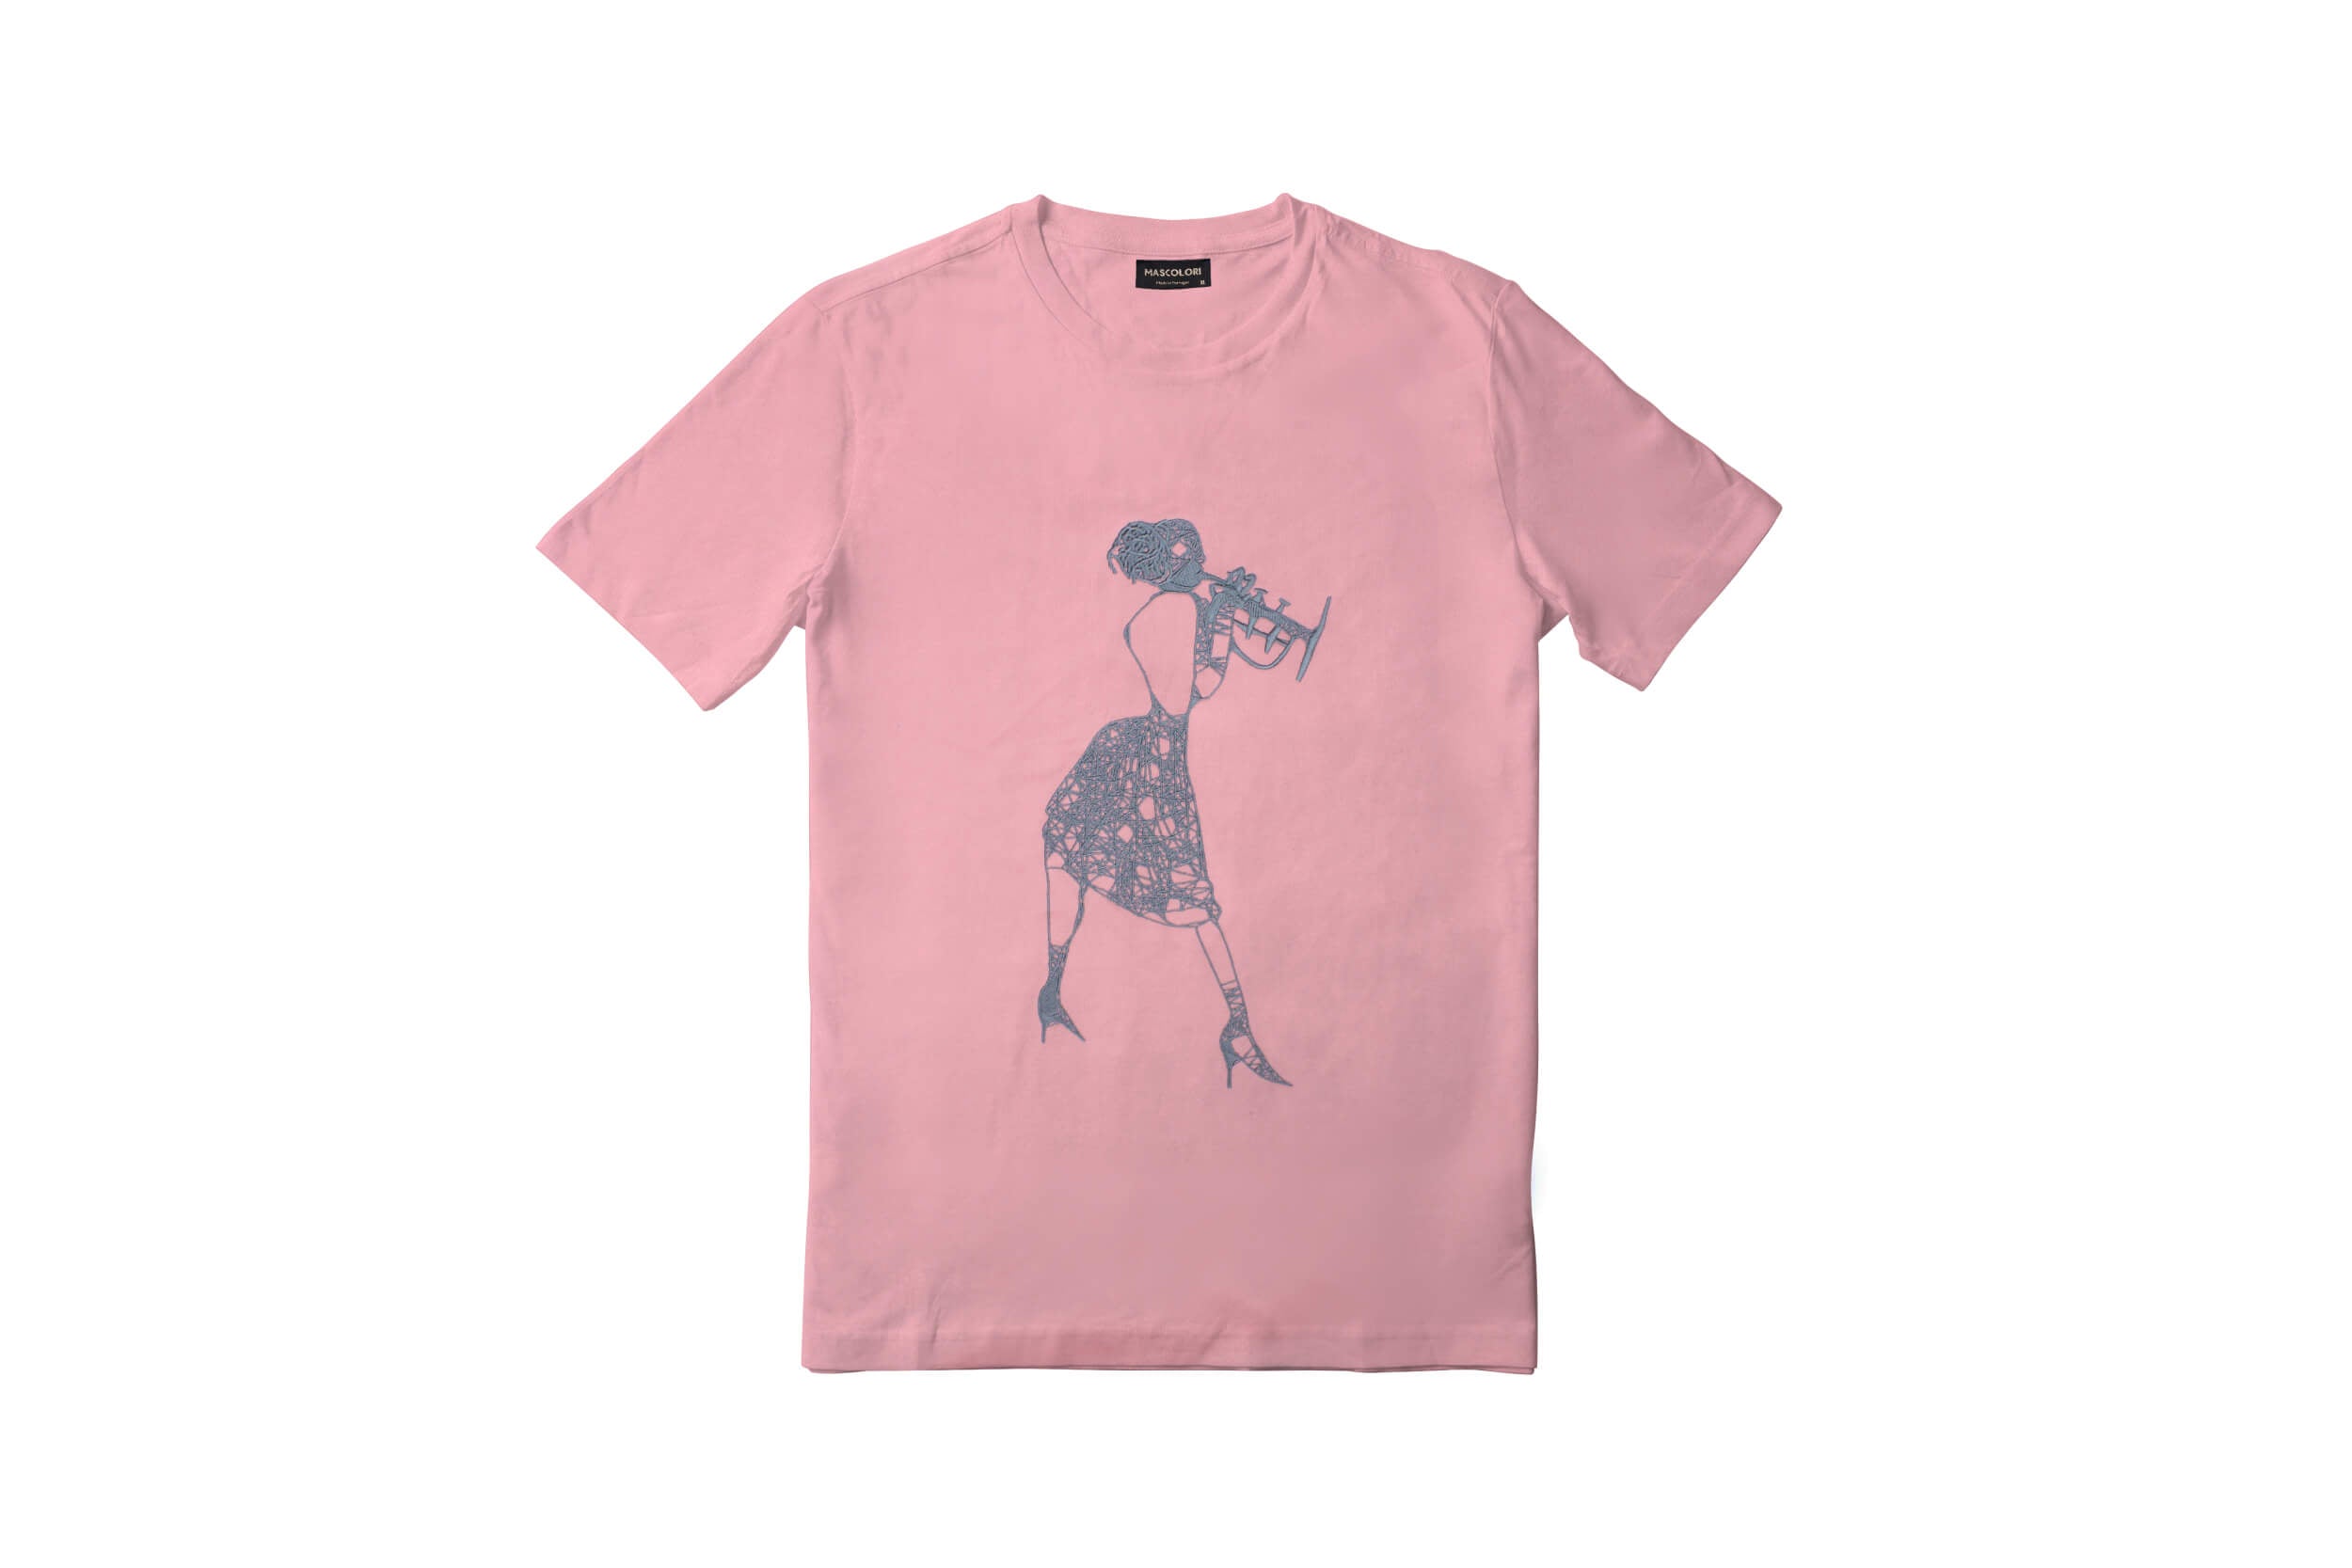 Easton Davy T-shirt Pink